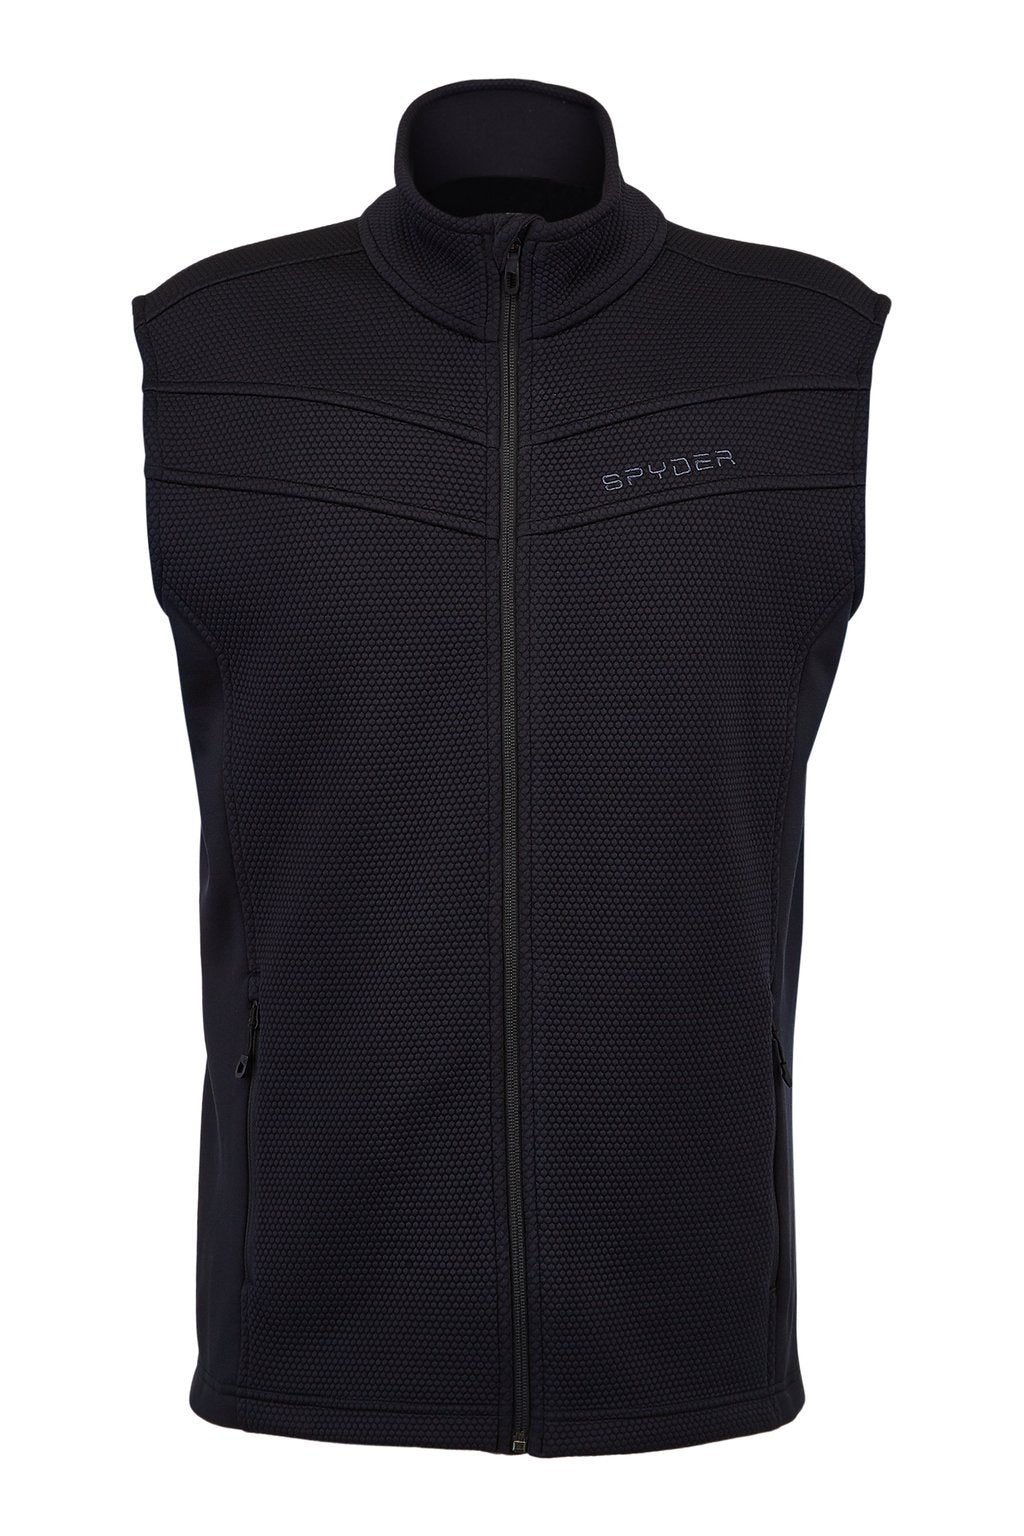 'Spyder' Men's Encore Fleece Vest - Black